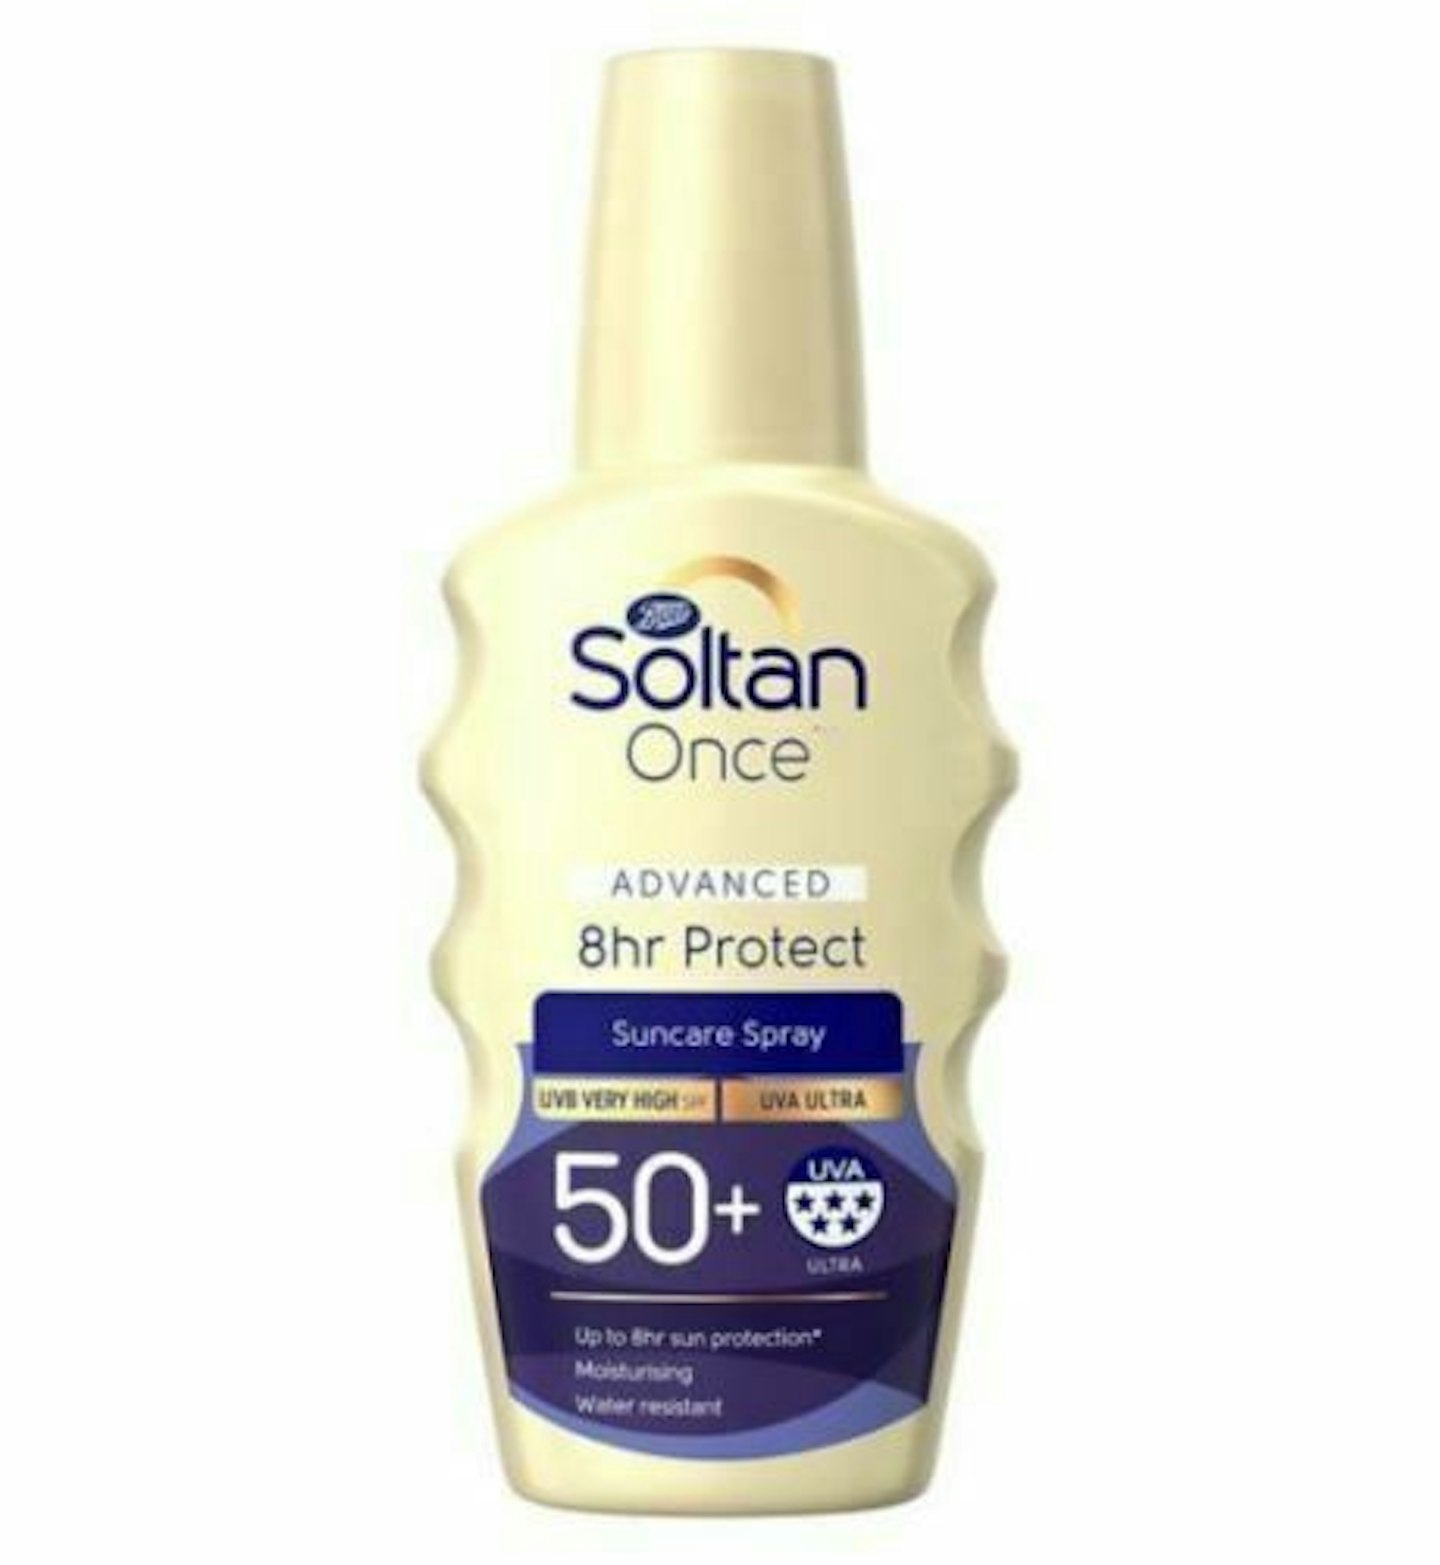 Soltan Once Advanced 8Hr Protect Suncare Spray SPF50+, £10